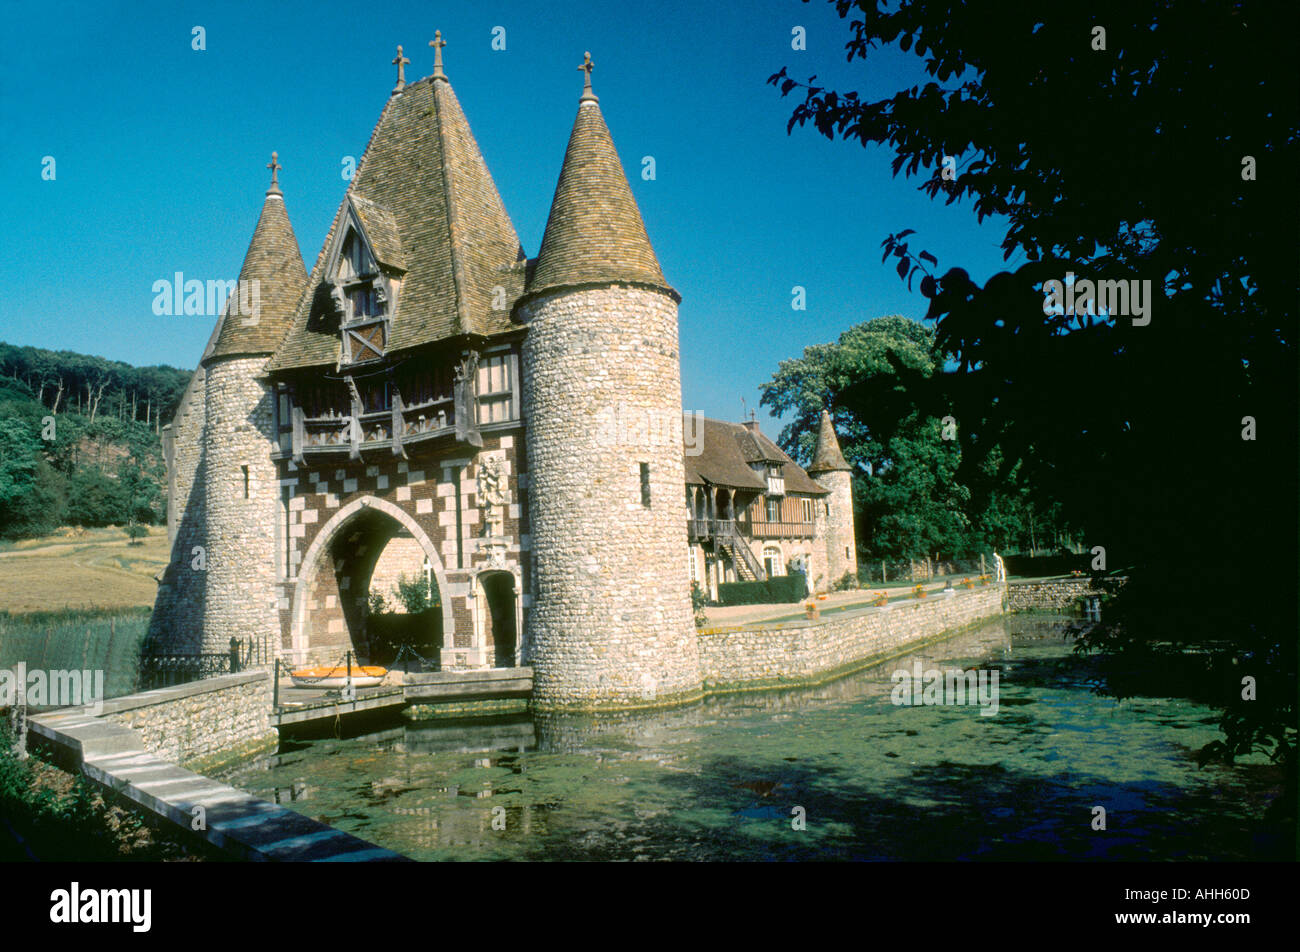 Honfleur France, Private Castle Northern France, Normandy Region, Ancient Monument Village, mysterious villa Stock Photo